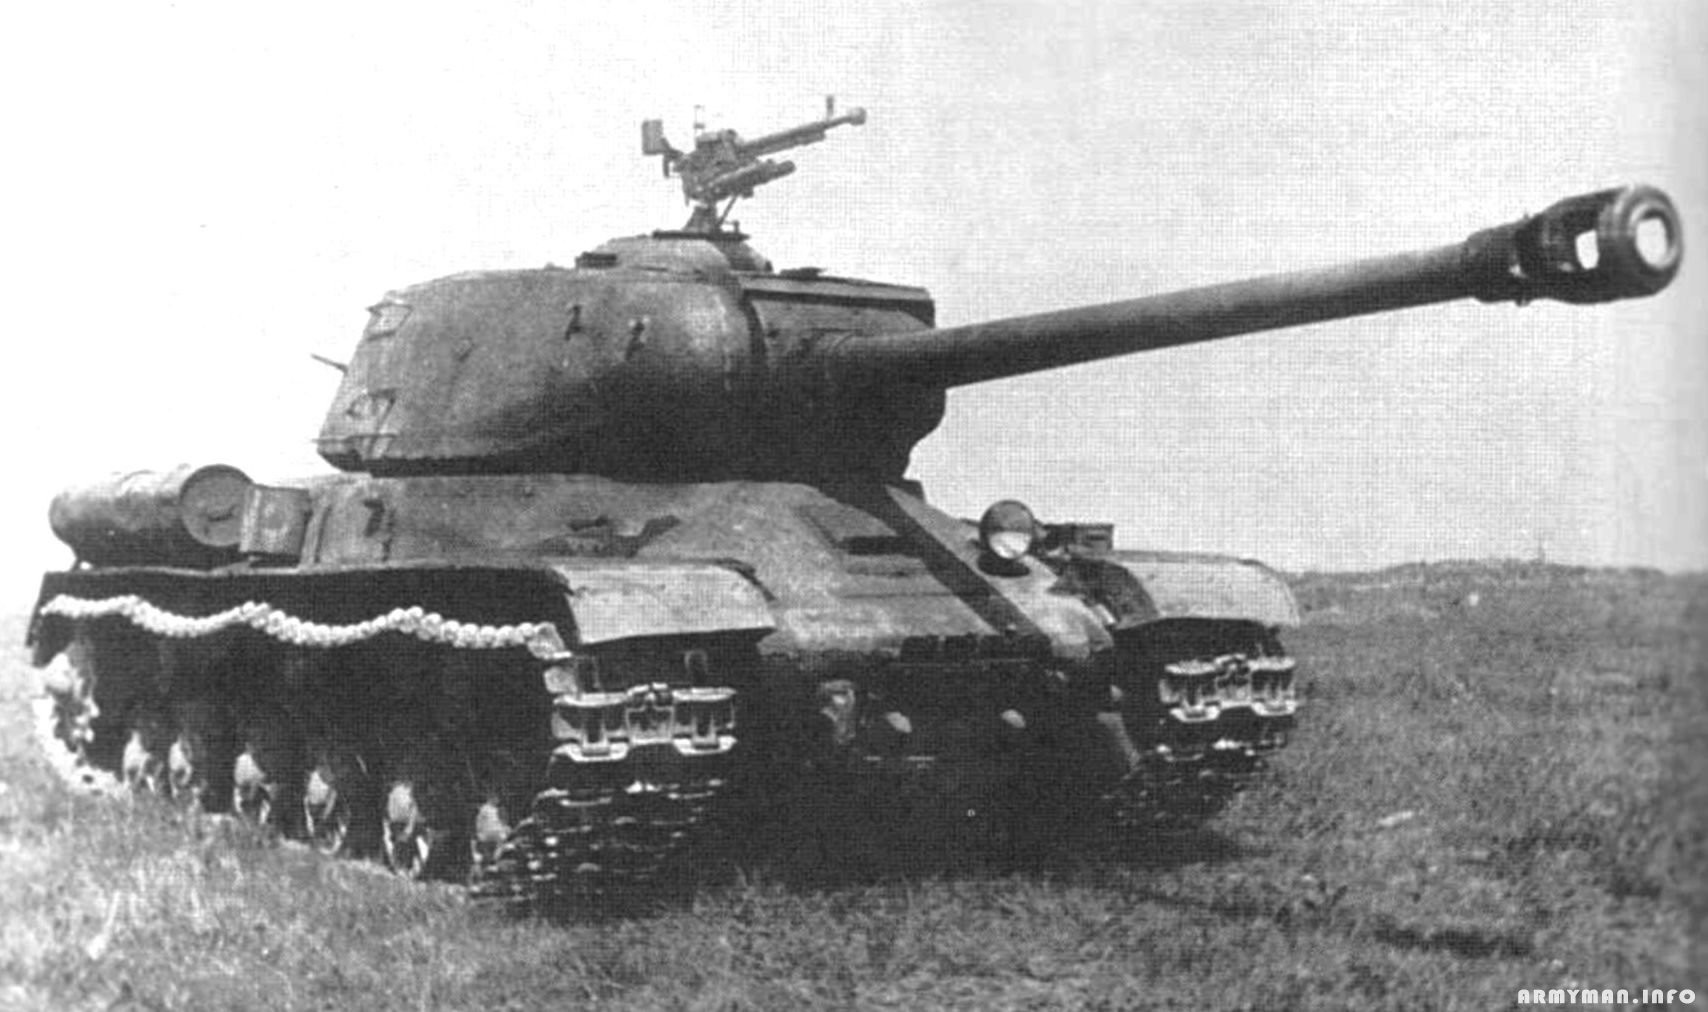 Тяжелый танк времен войны